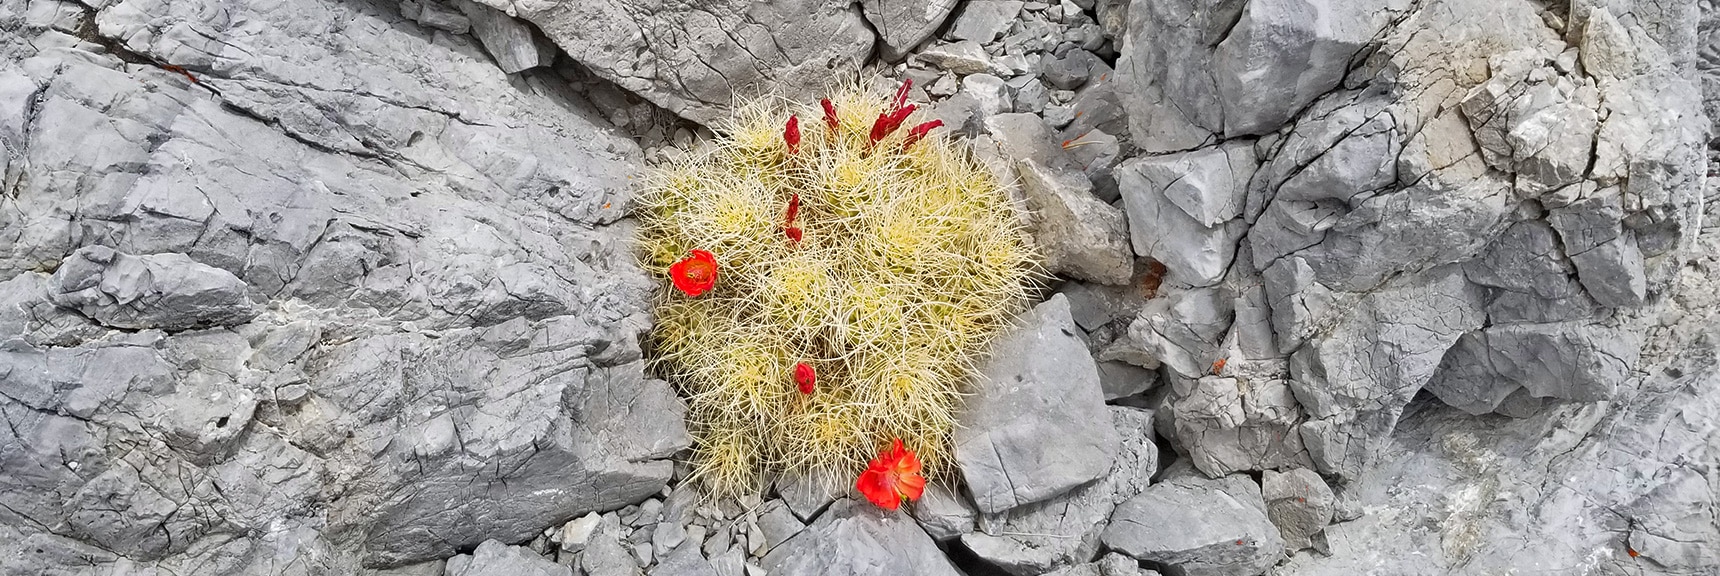 Flowering Cactus at Summit of 9,235ft Bluff Northeast of McFarland Peak | Sawmill Trail to McFarland Peak | Spring Mountains, Nevada